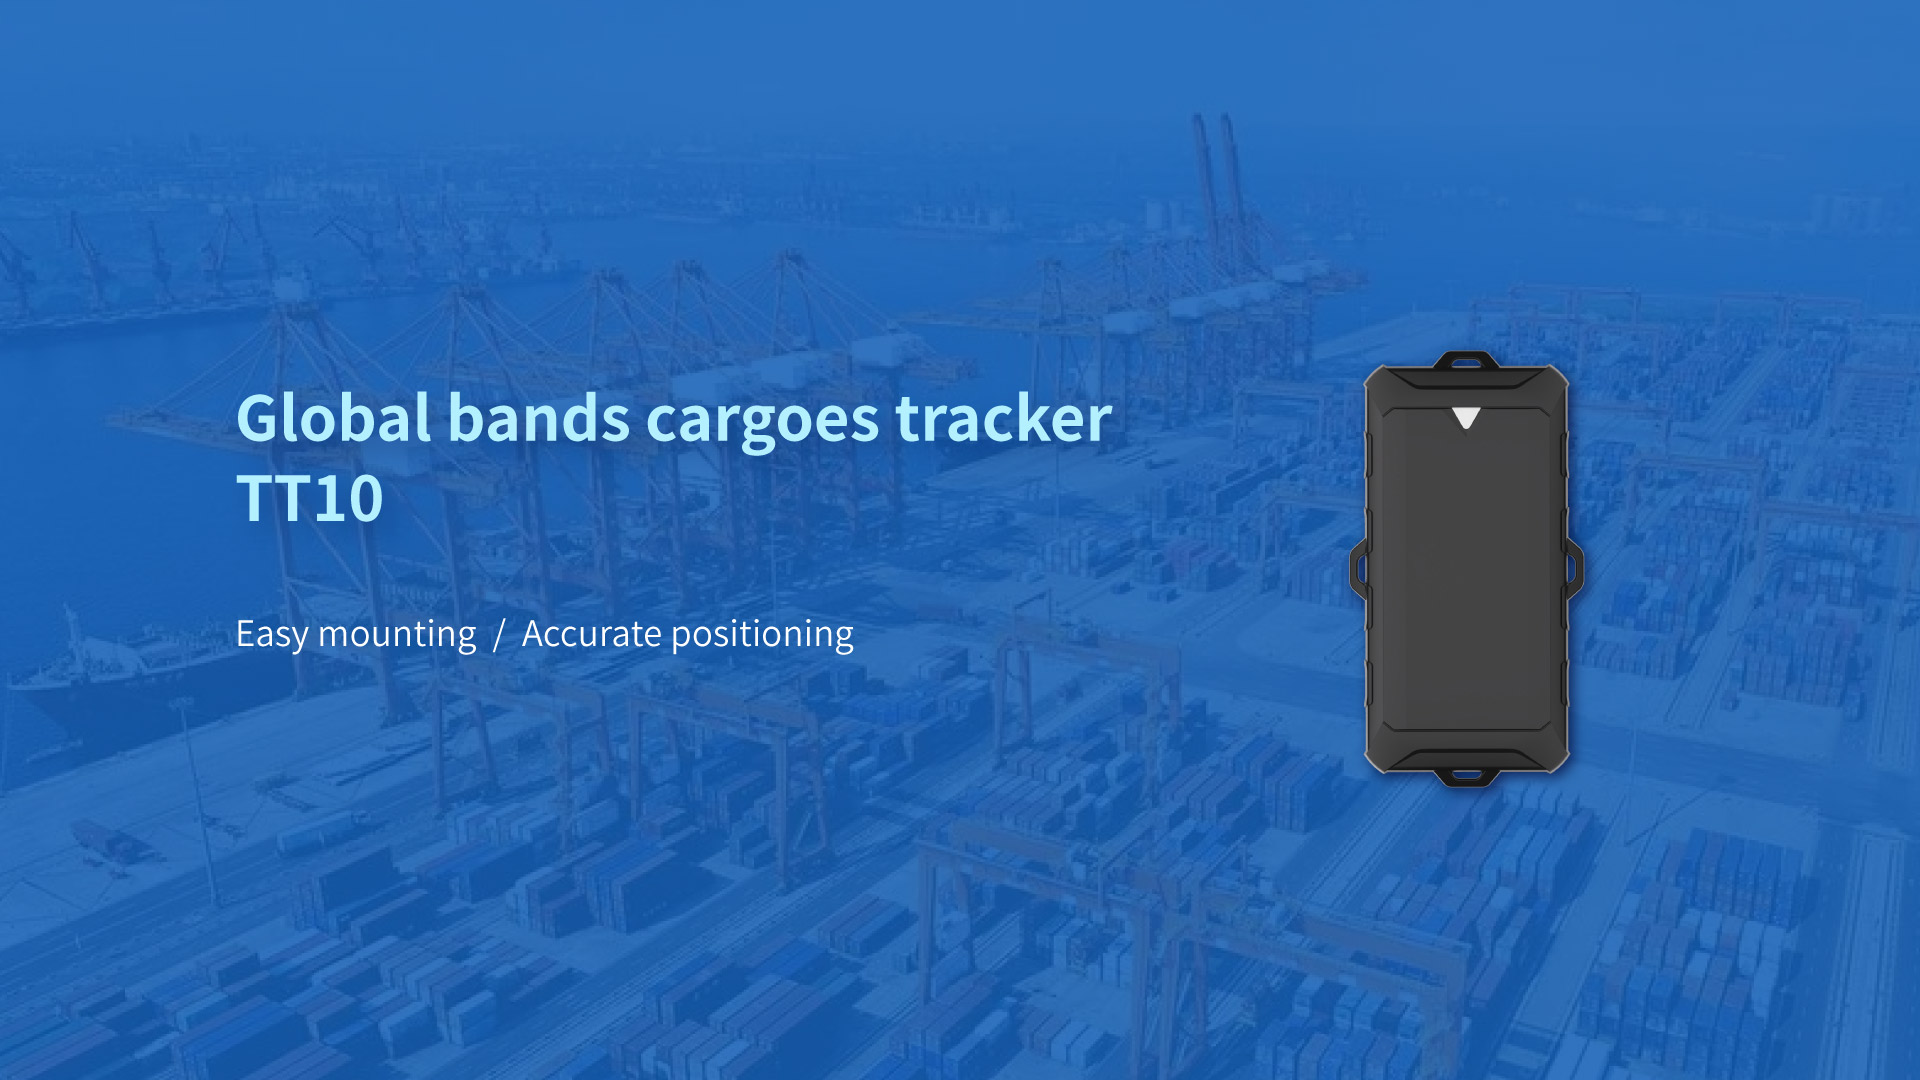 Global bands cargoes tracker TT10